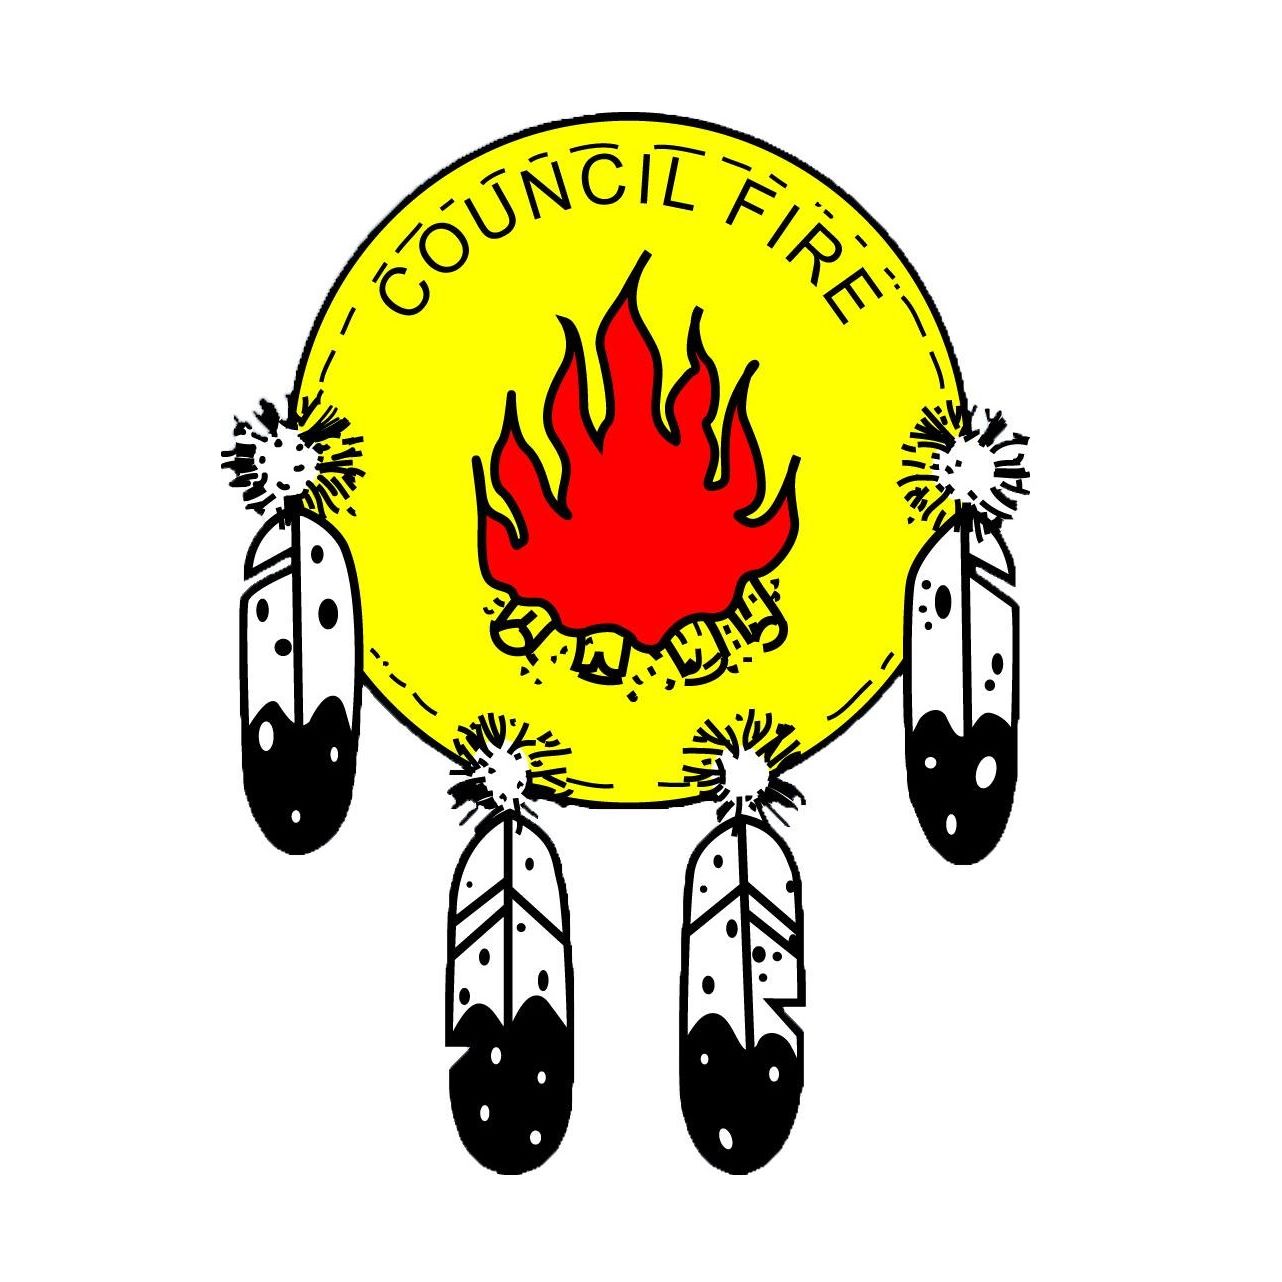 Native American Organization in Canada - Toronto Council Fire Native Cultural Centre